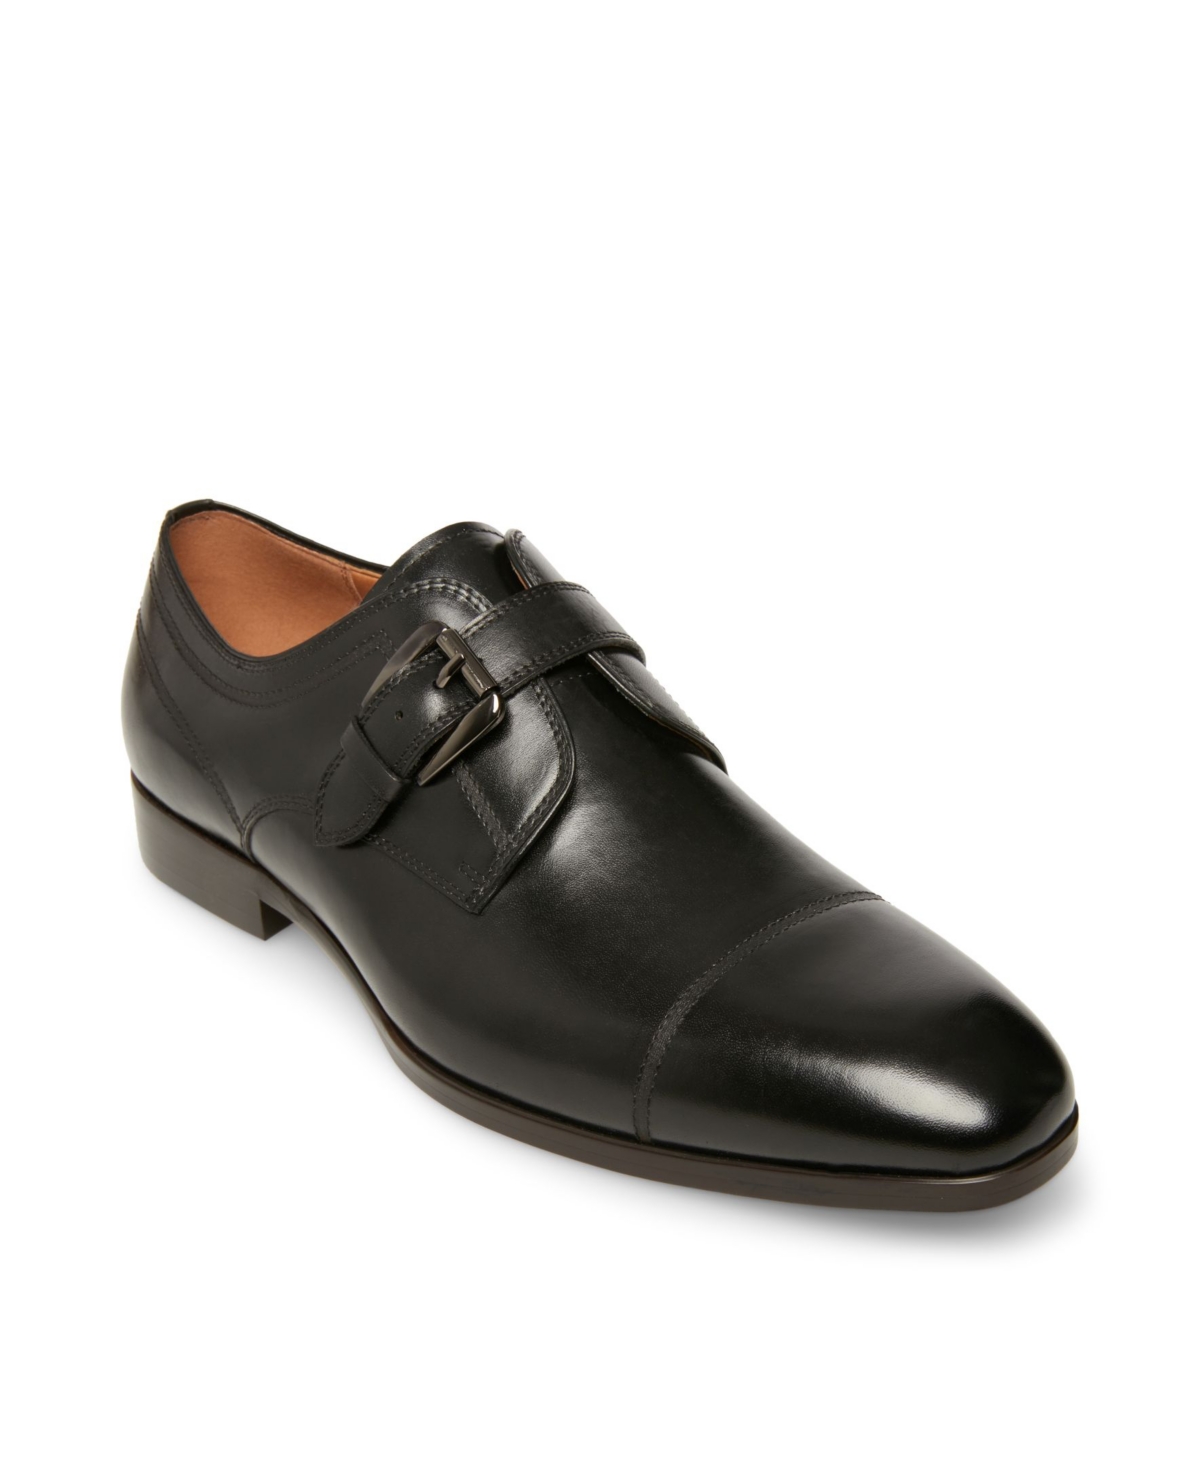 Men's Covet Loafer Shoes - Cognac Leather